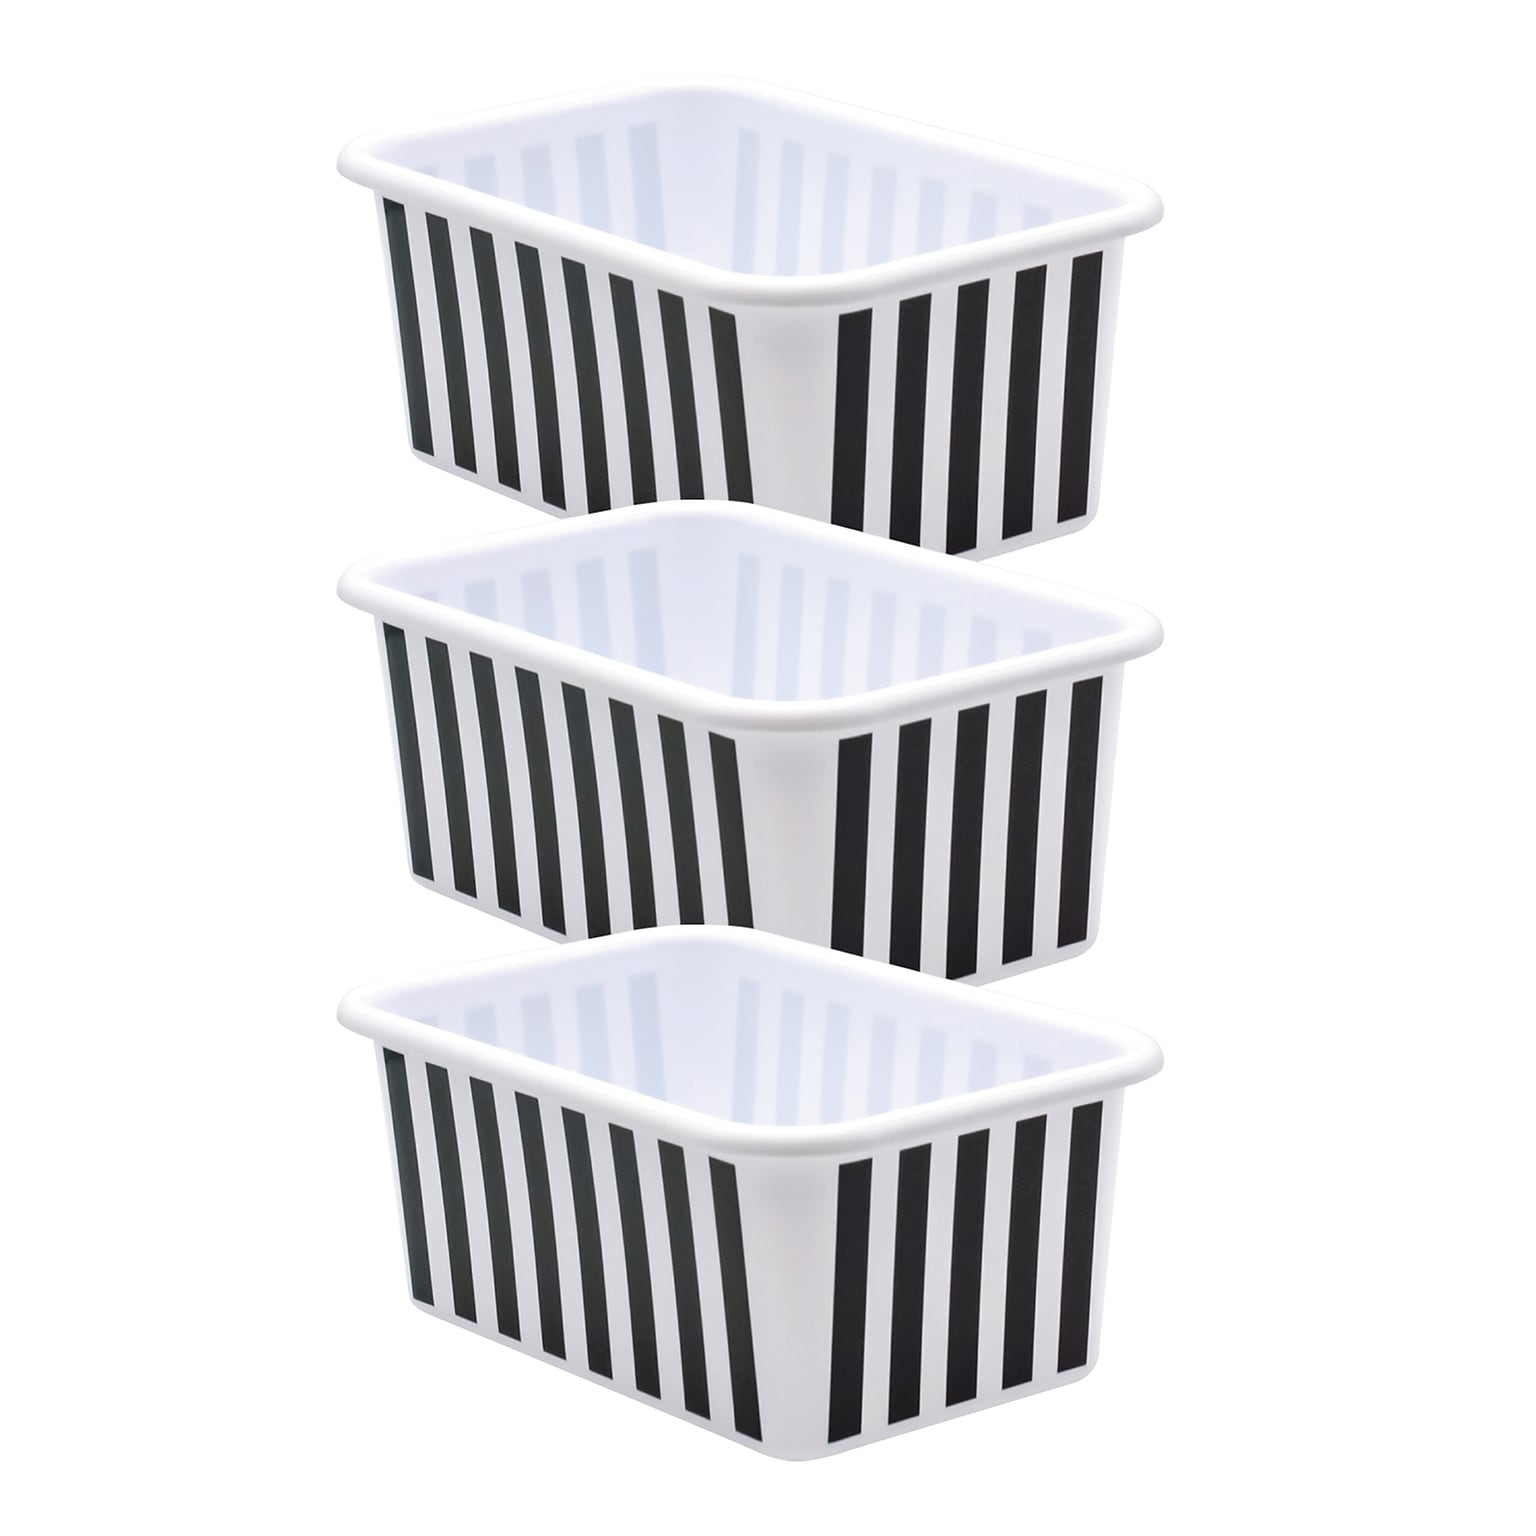 Teacher Created Resources® Plastic Storage Bin, Small, 7.75 x 11.38 x 5 , Black & White Stripes, Pack of 3 (TCR20400-3)